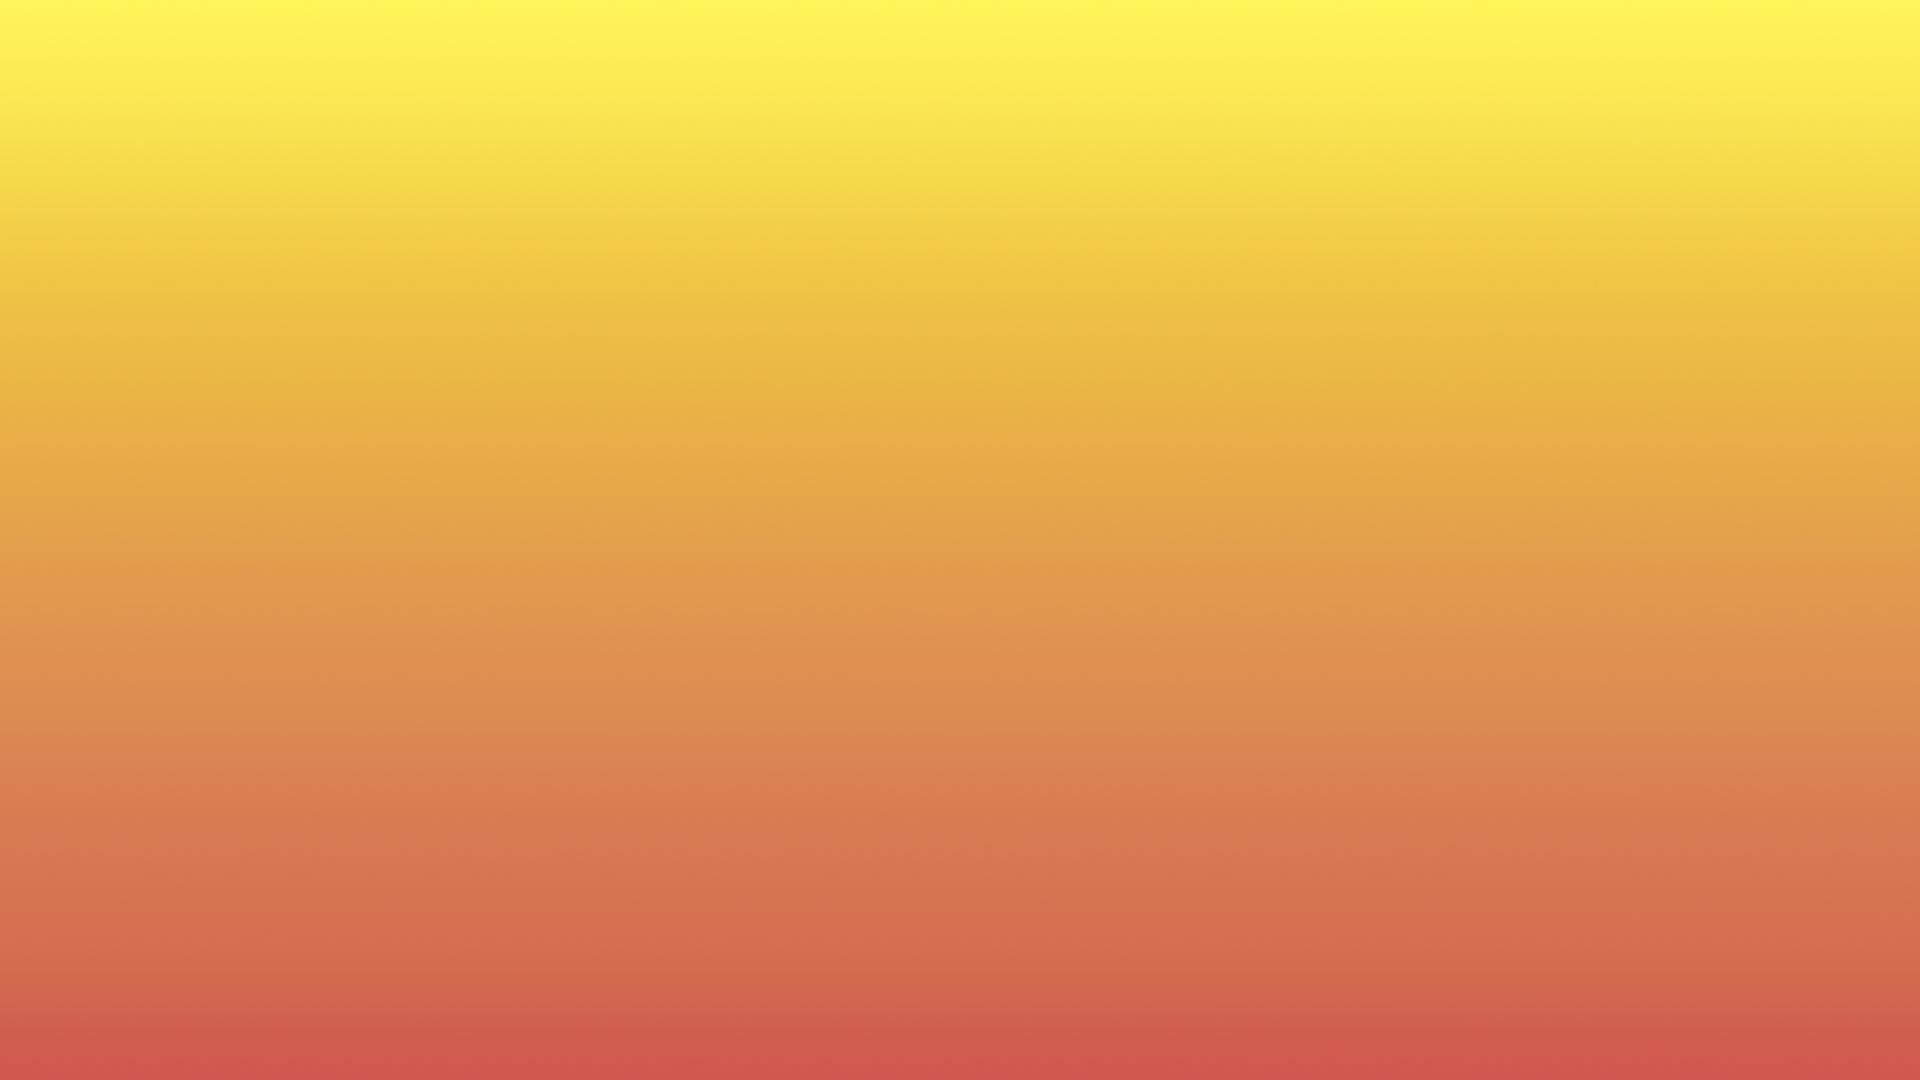 Yellow-Orange-Red Gradient by MARST